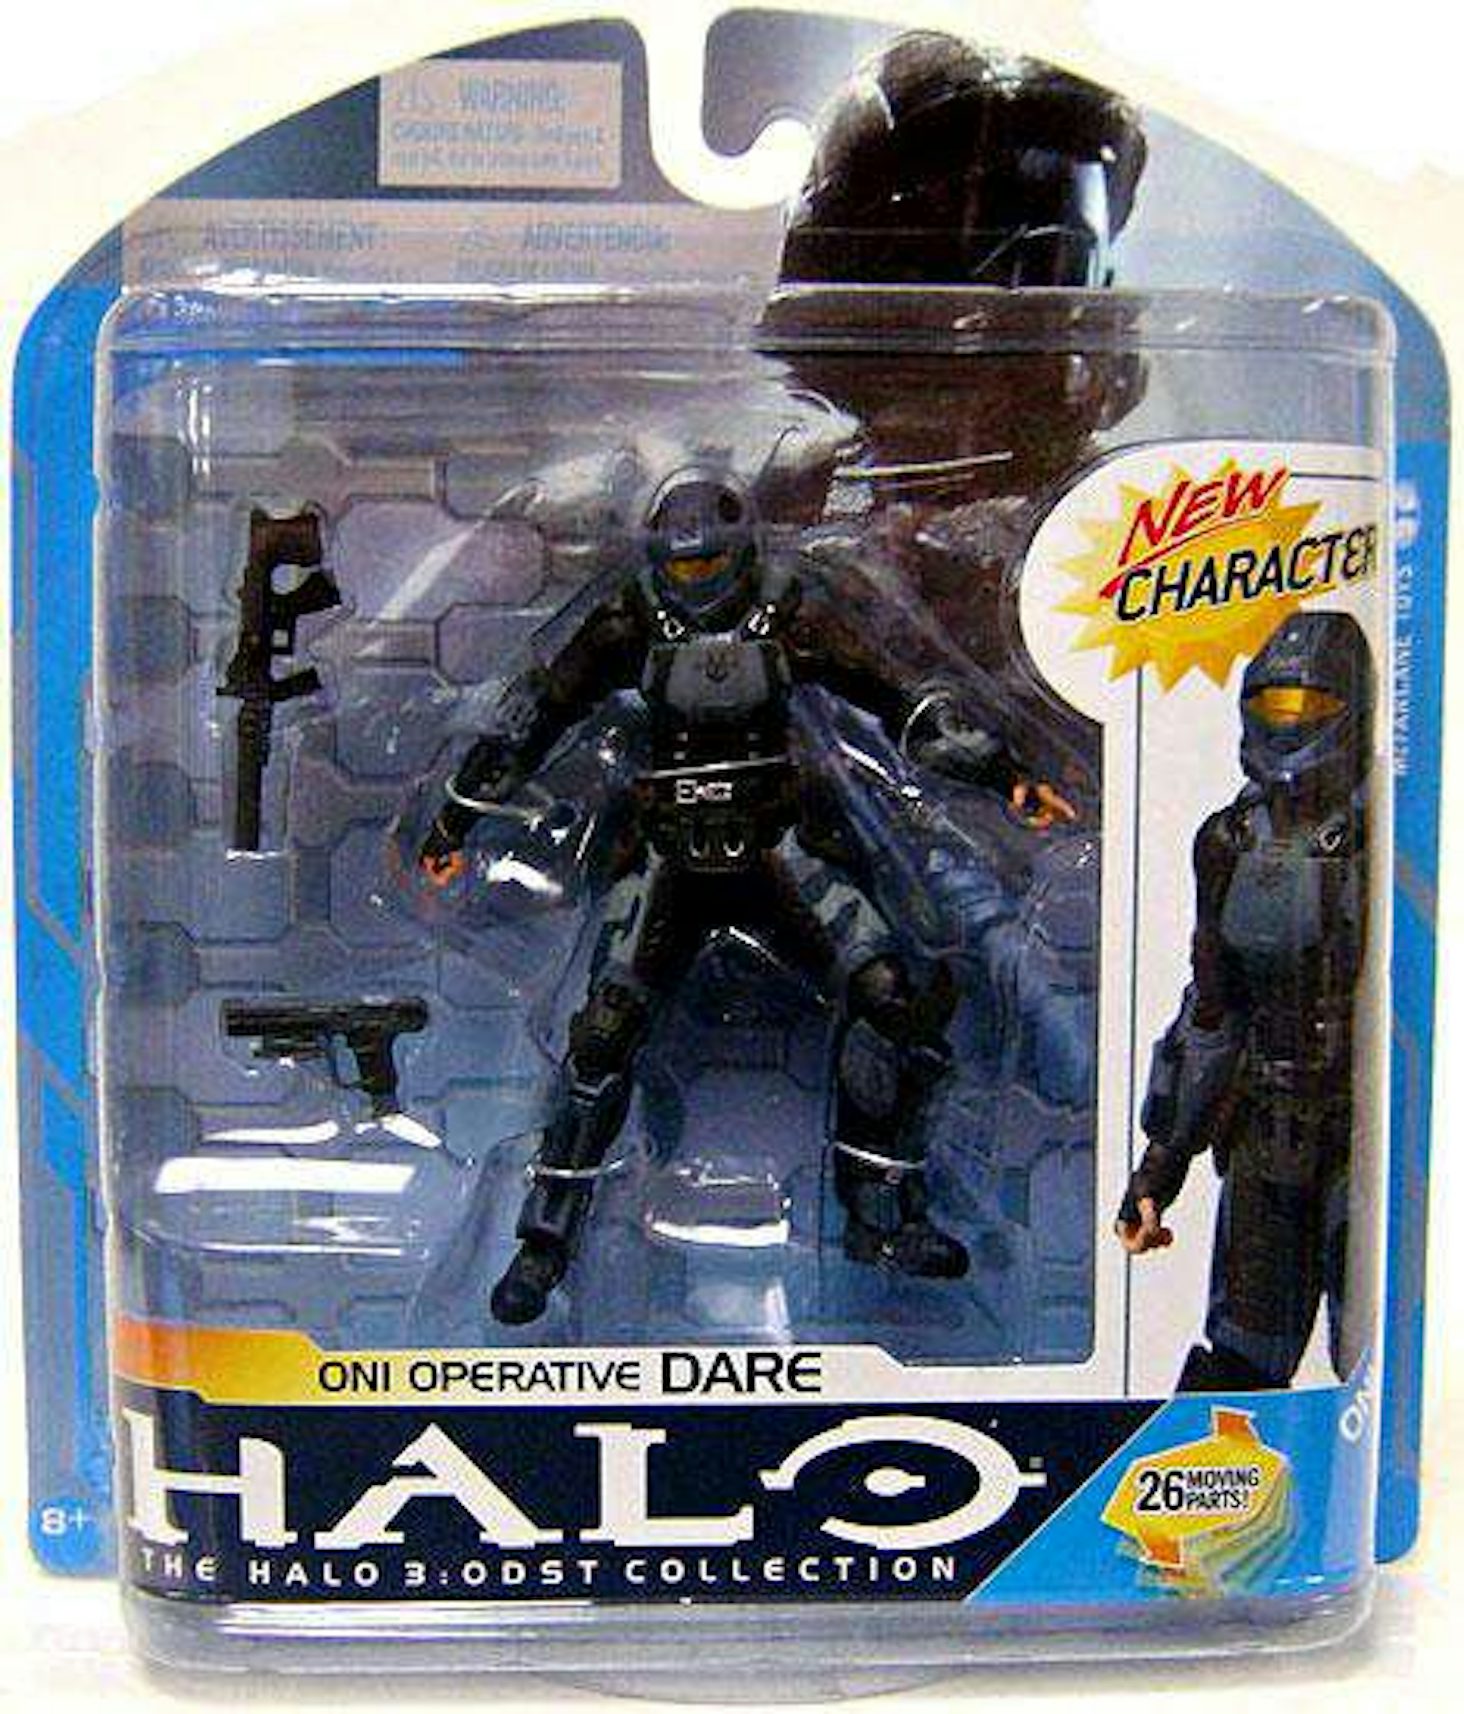 McFarlane Toys Halo 5 Series 2 Spartan Hermes Action Figure - US